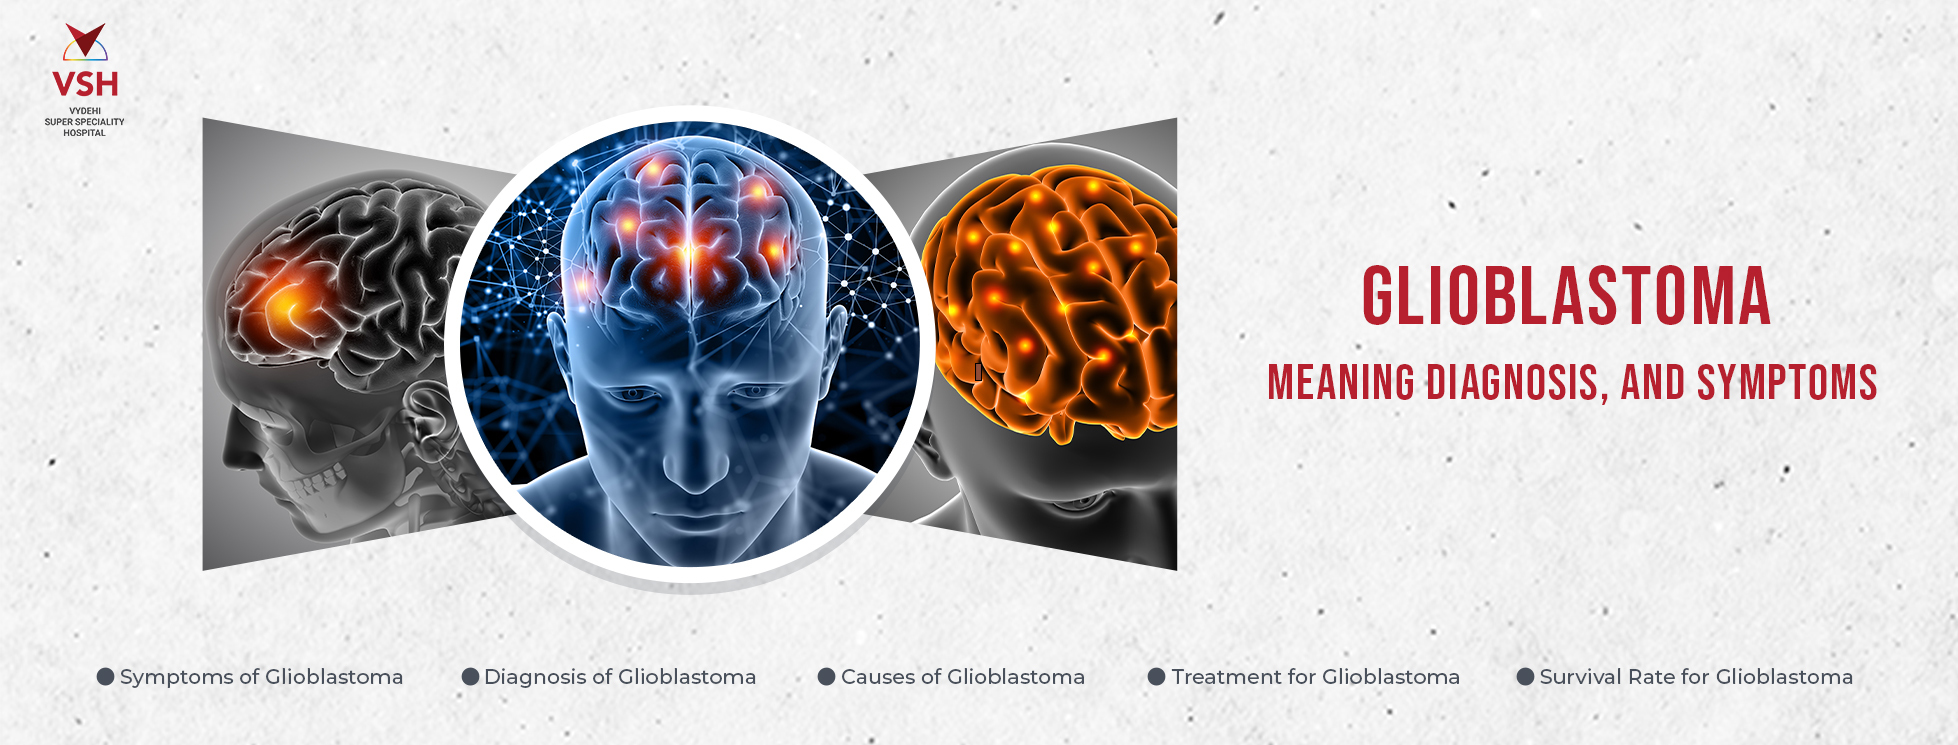 Glioblastoma Meaning, Diagnosis, and Symptoms